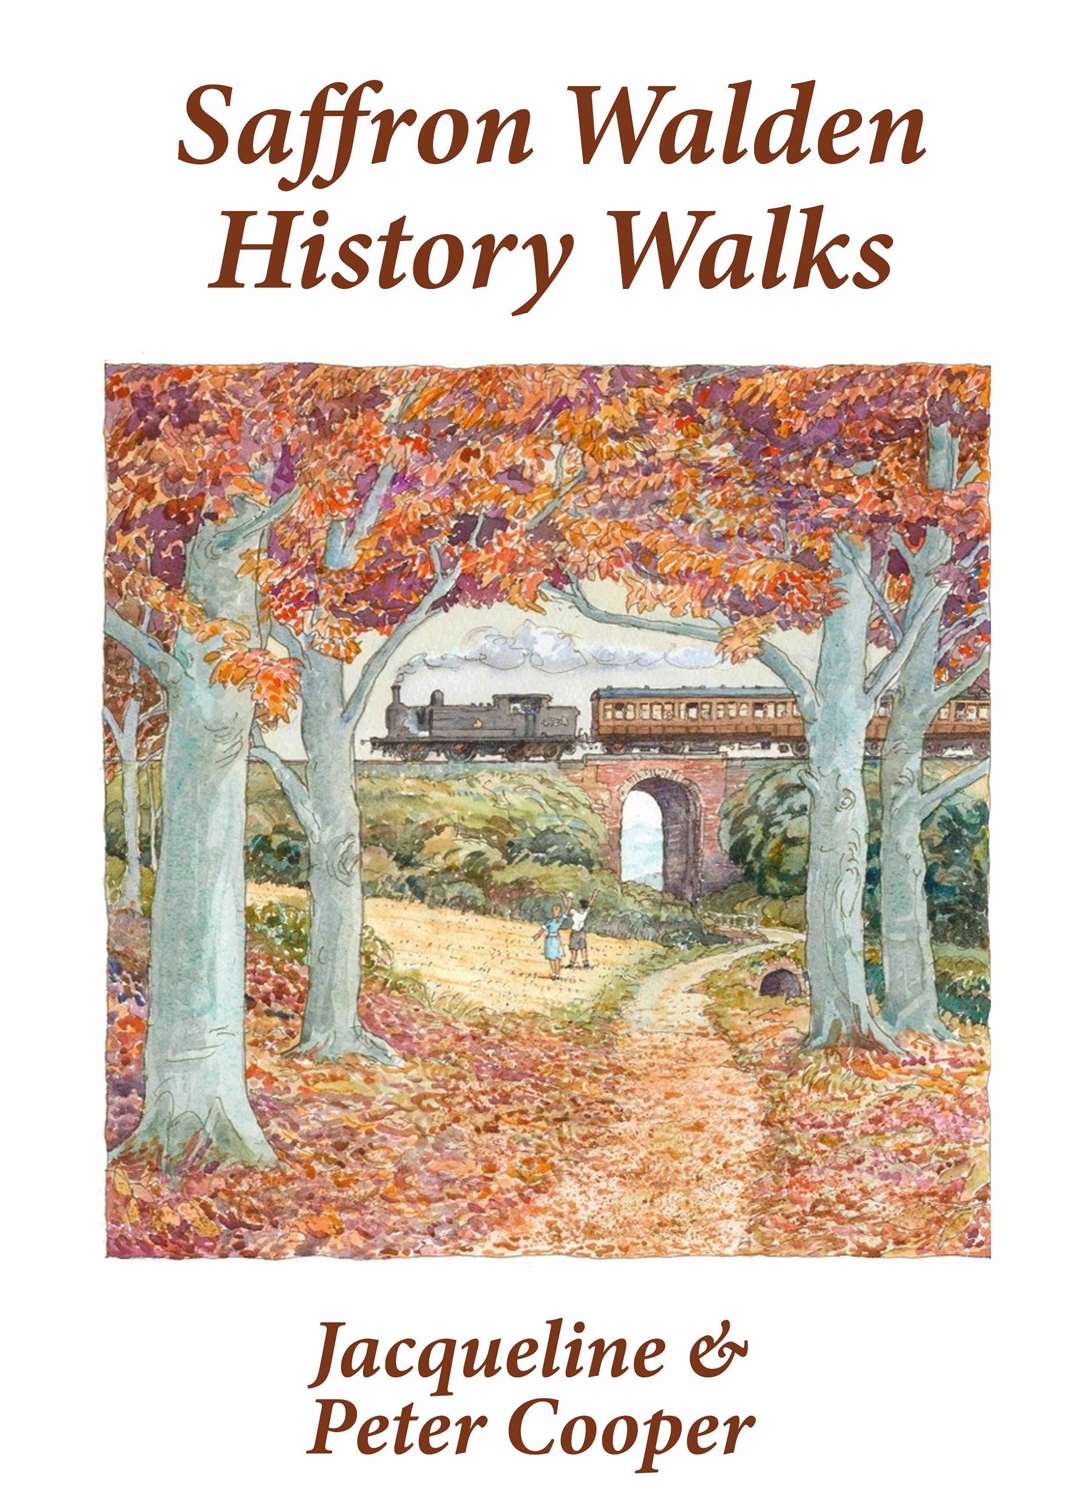 Saffron Walden History Walks by Jacqueline & Peter Cooper | 9781873669242